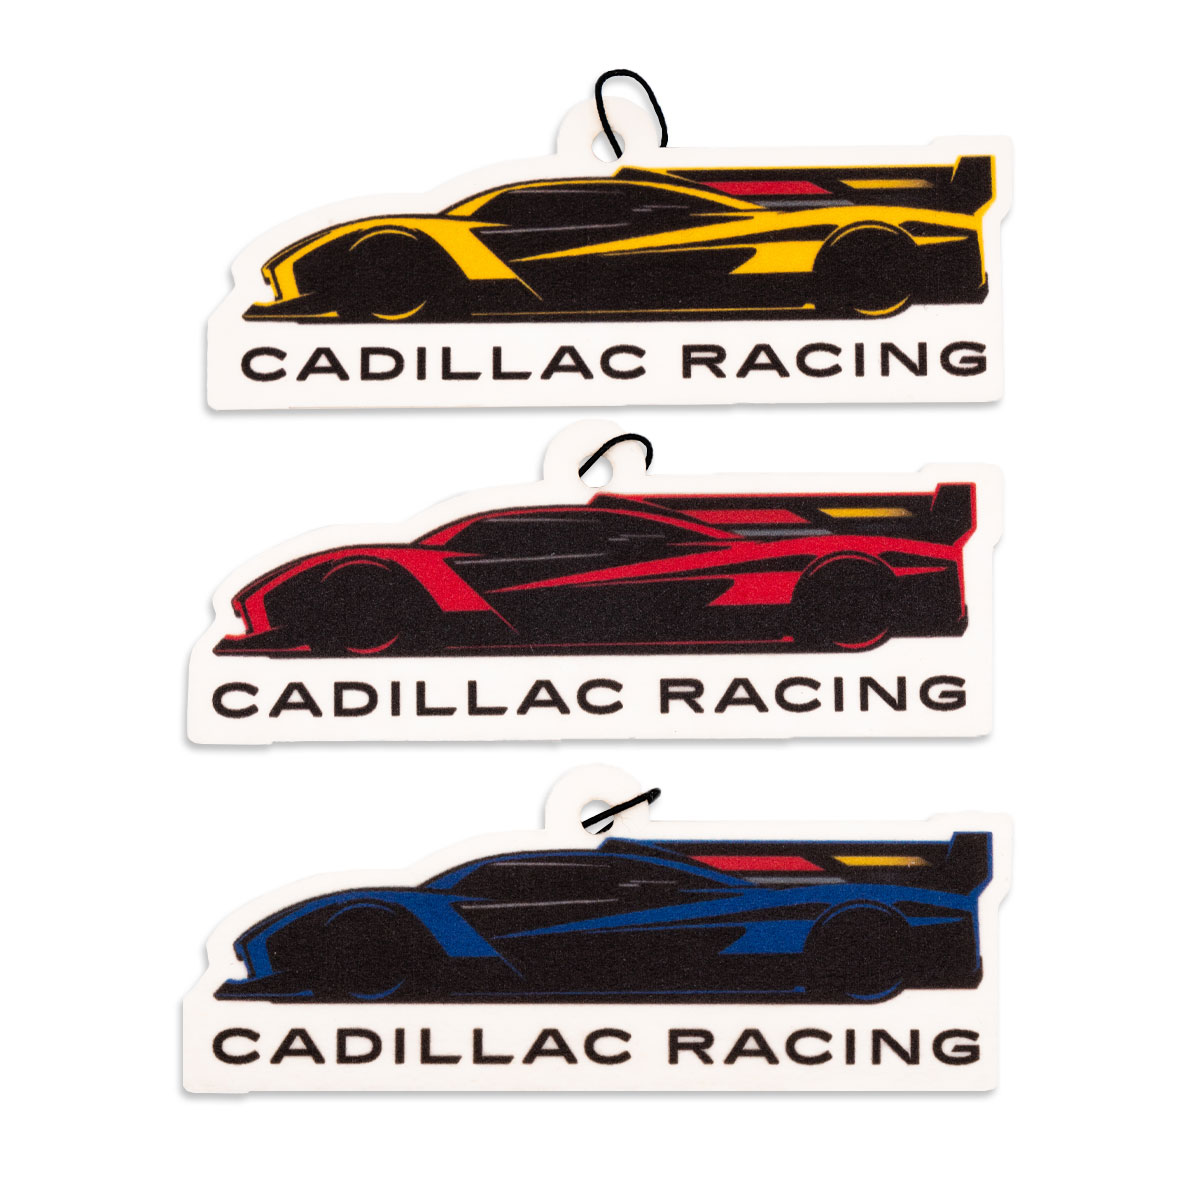 Cadillac Racing Car Freshener - Pack of 3